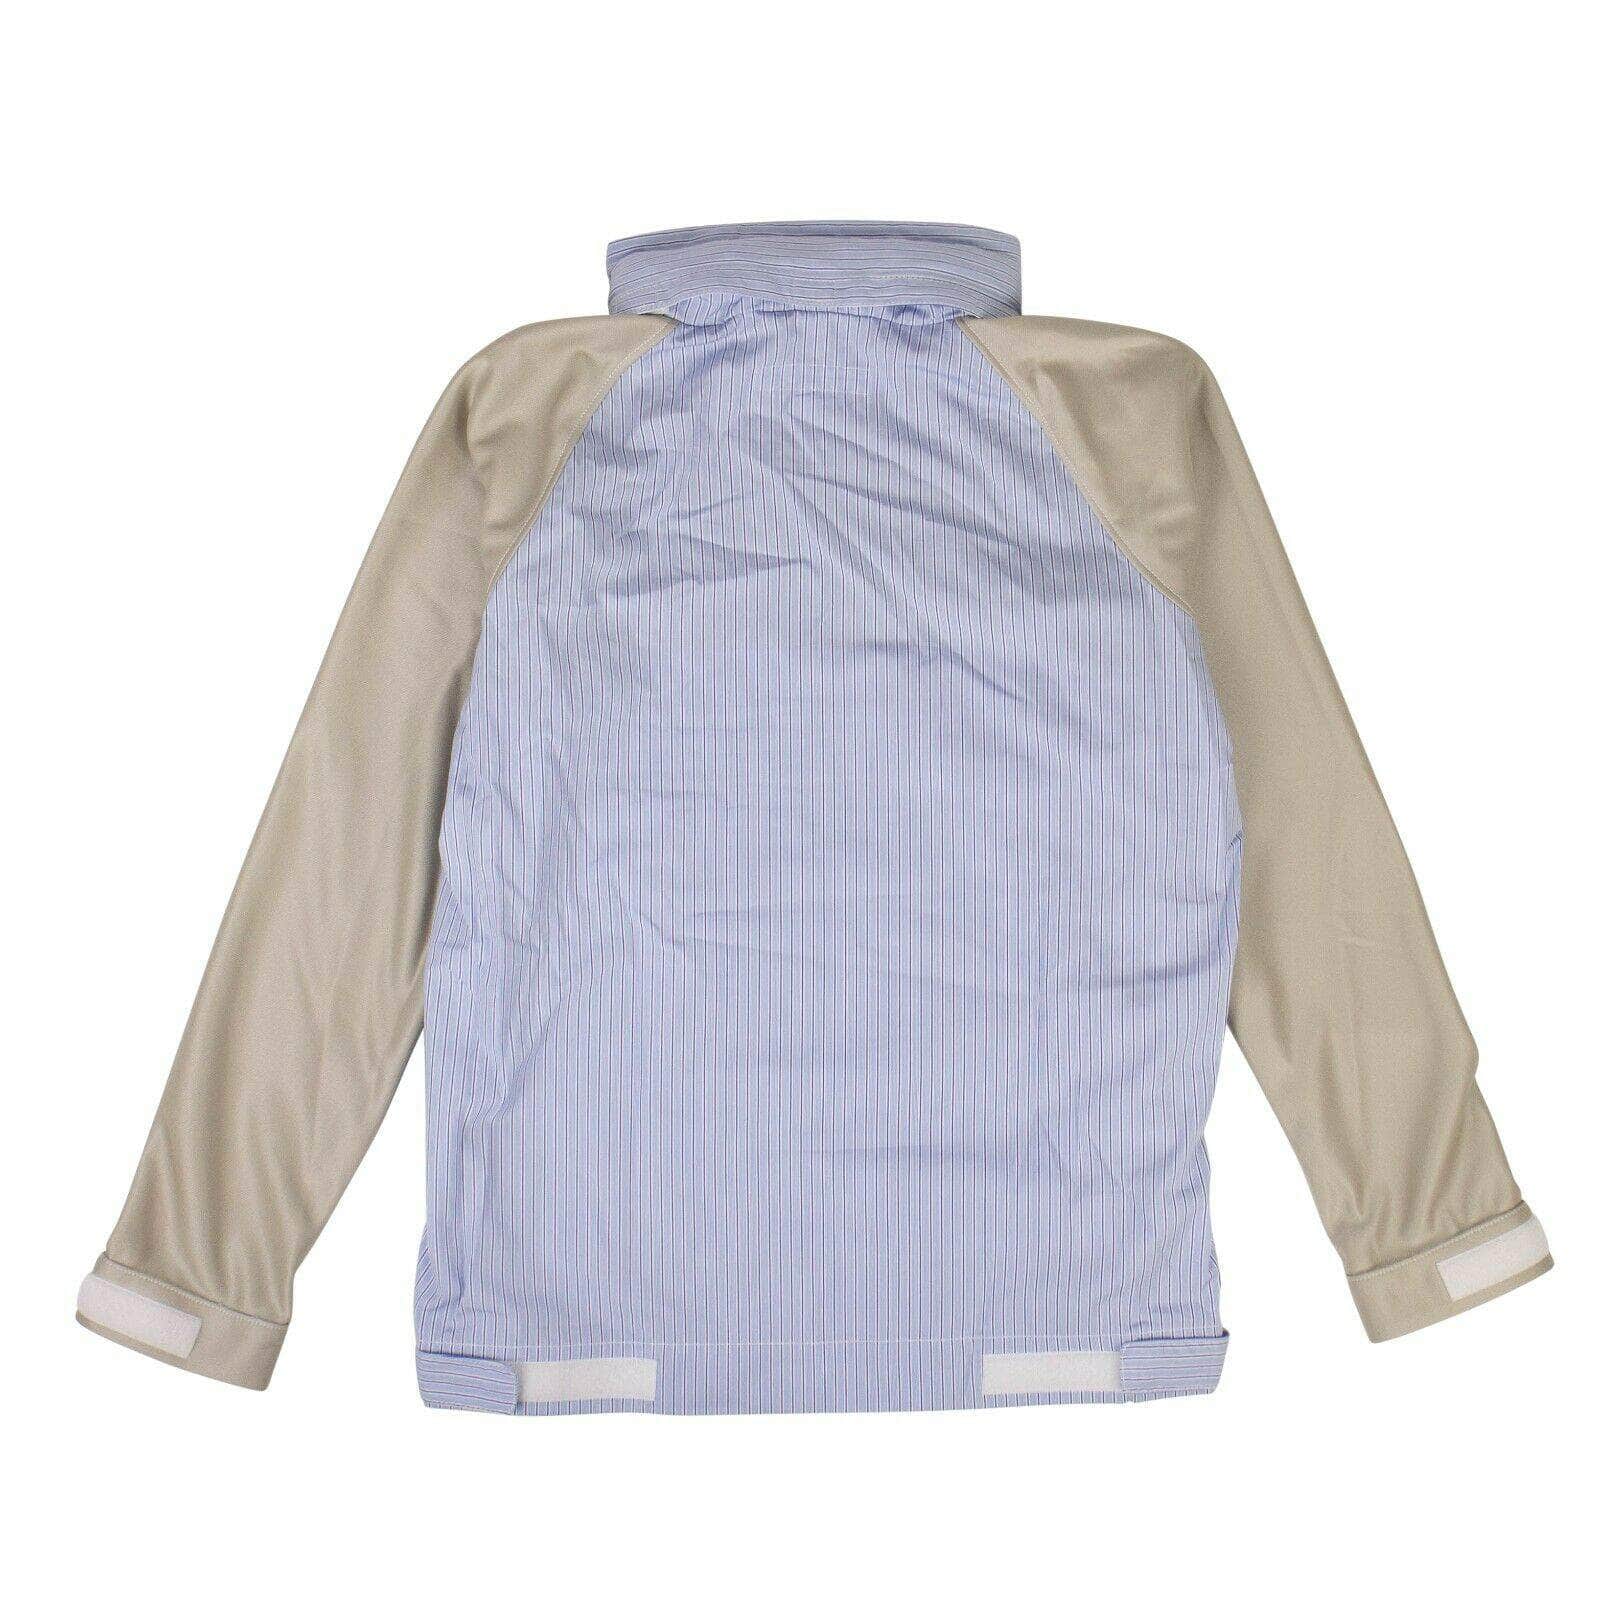 CDG SHIRT Men's Sweaters Cotton Stripe Long Sleeves Hooded Shirt - Gray/Blue